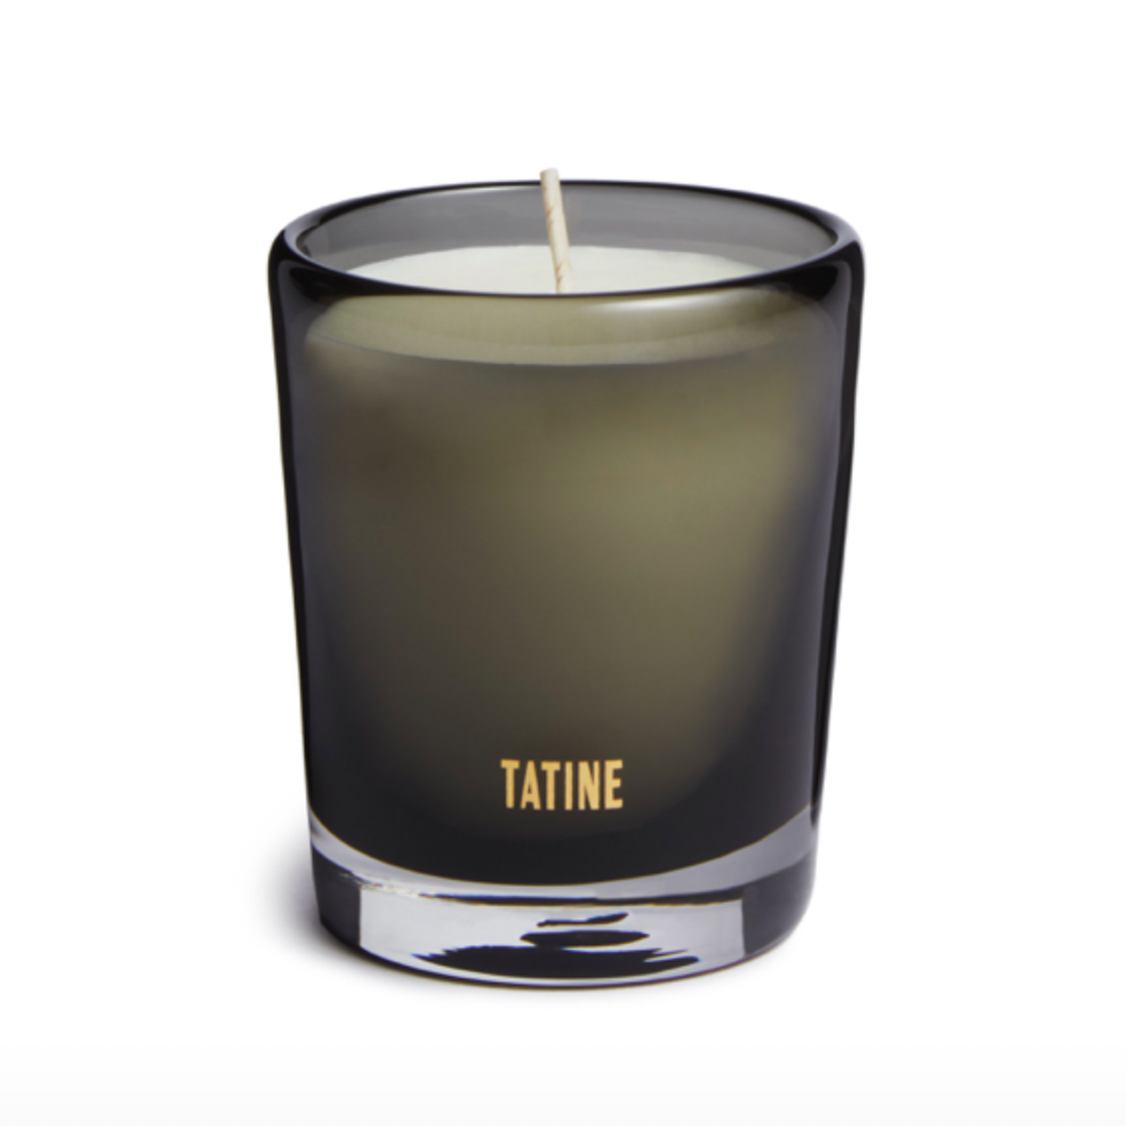 Tatine Candle